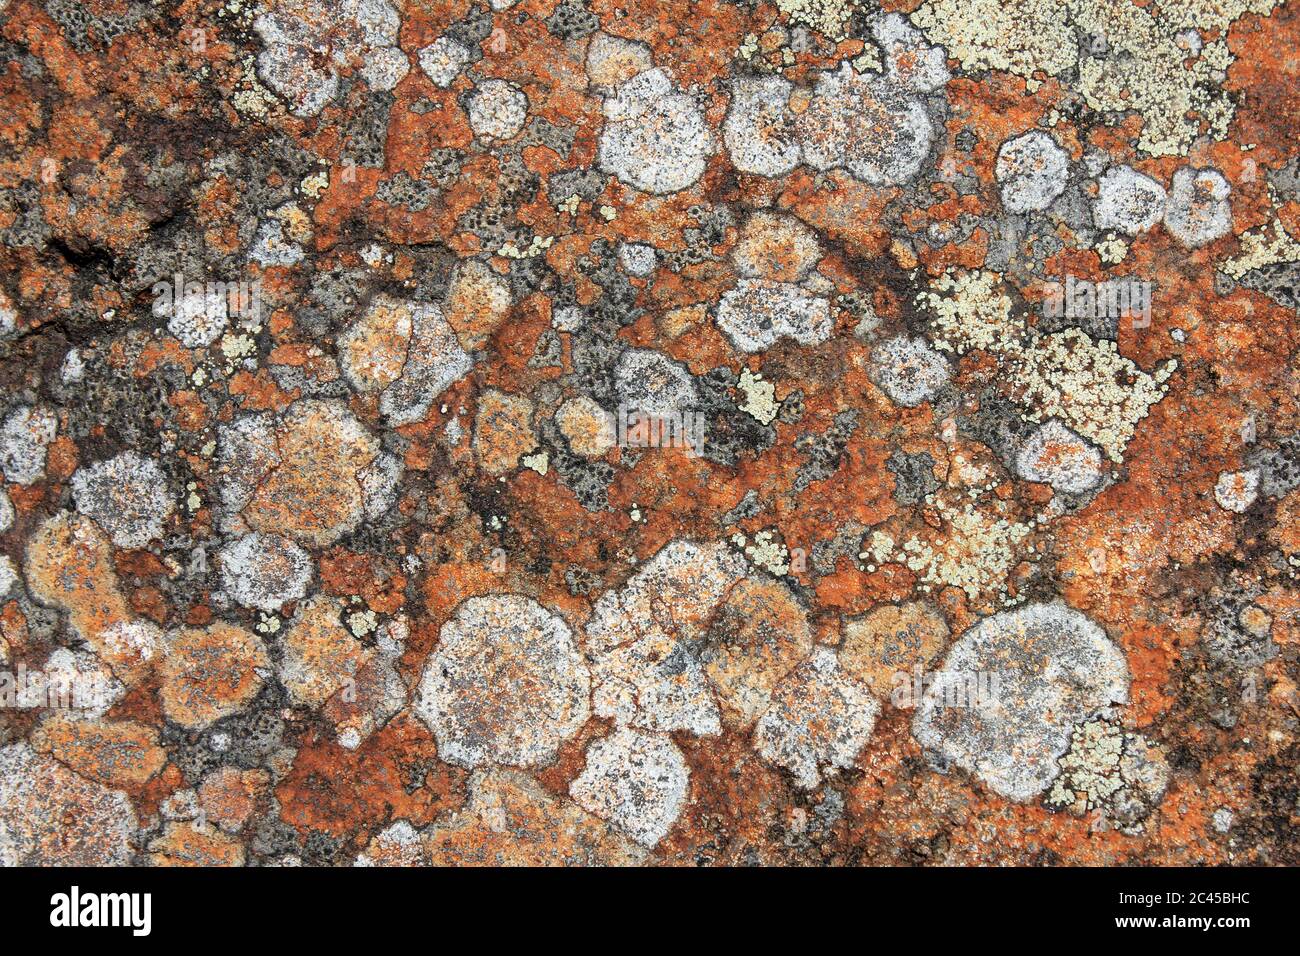 Lichen Patterns On Millstone Grit, Anglezarke White Coppice near Chorley, Lancashire, UK Stock Photo